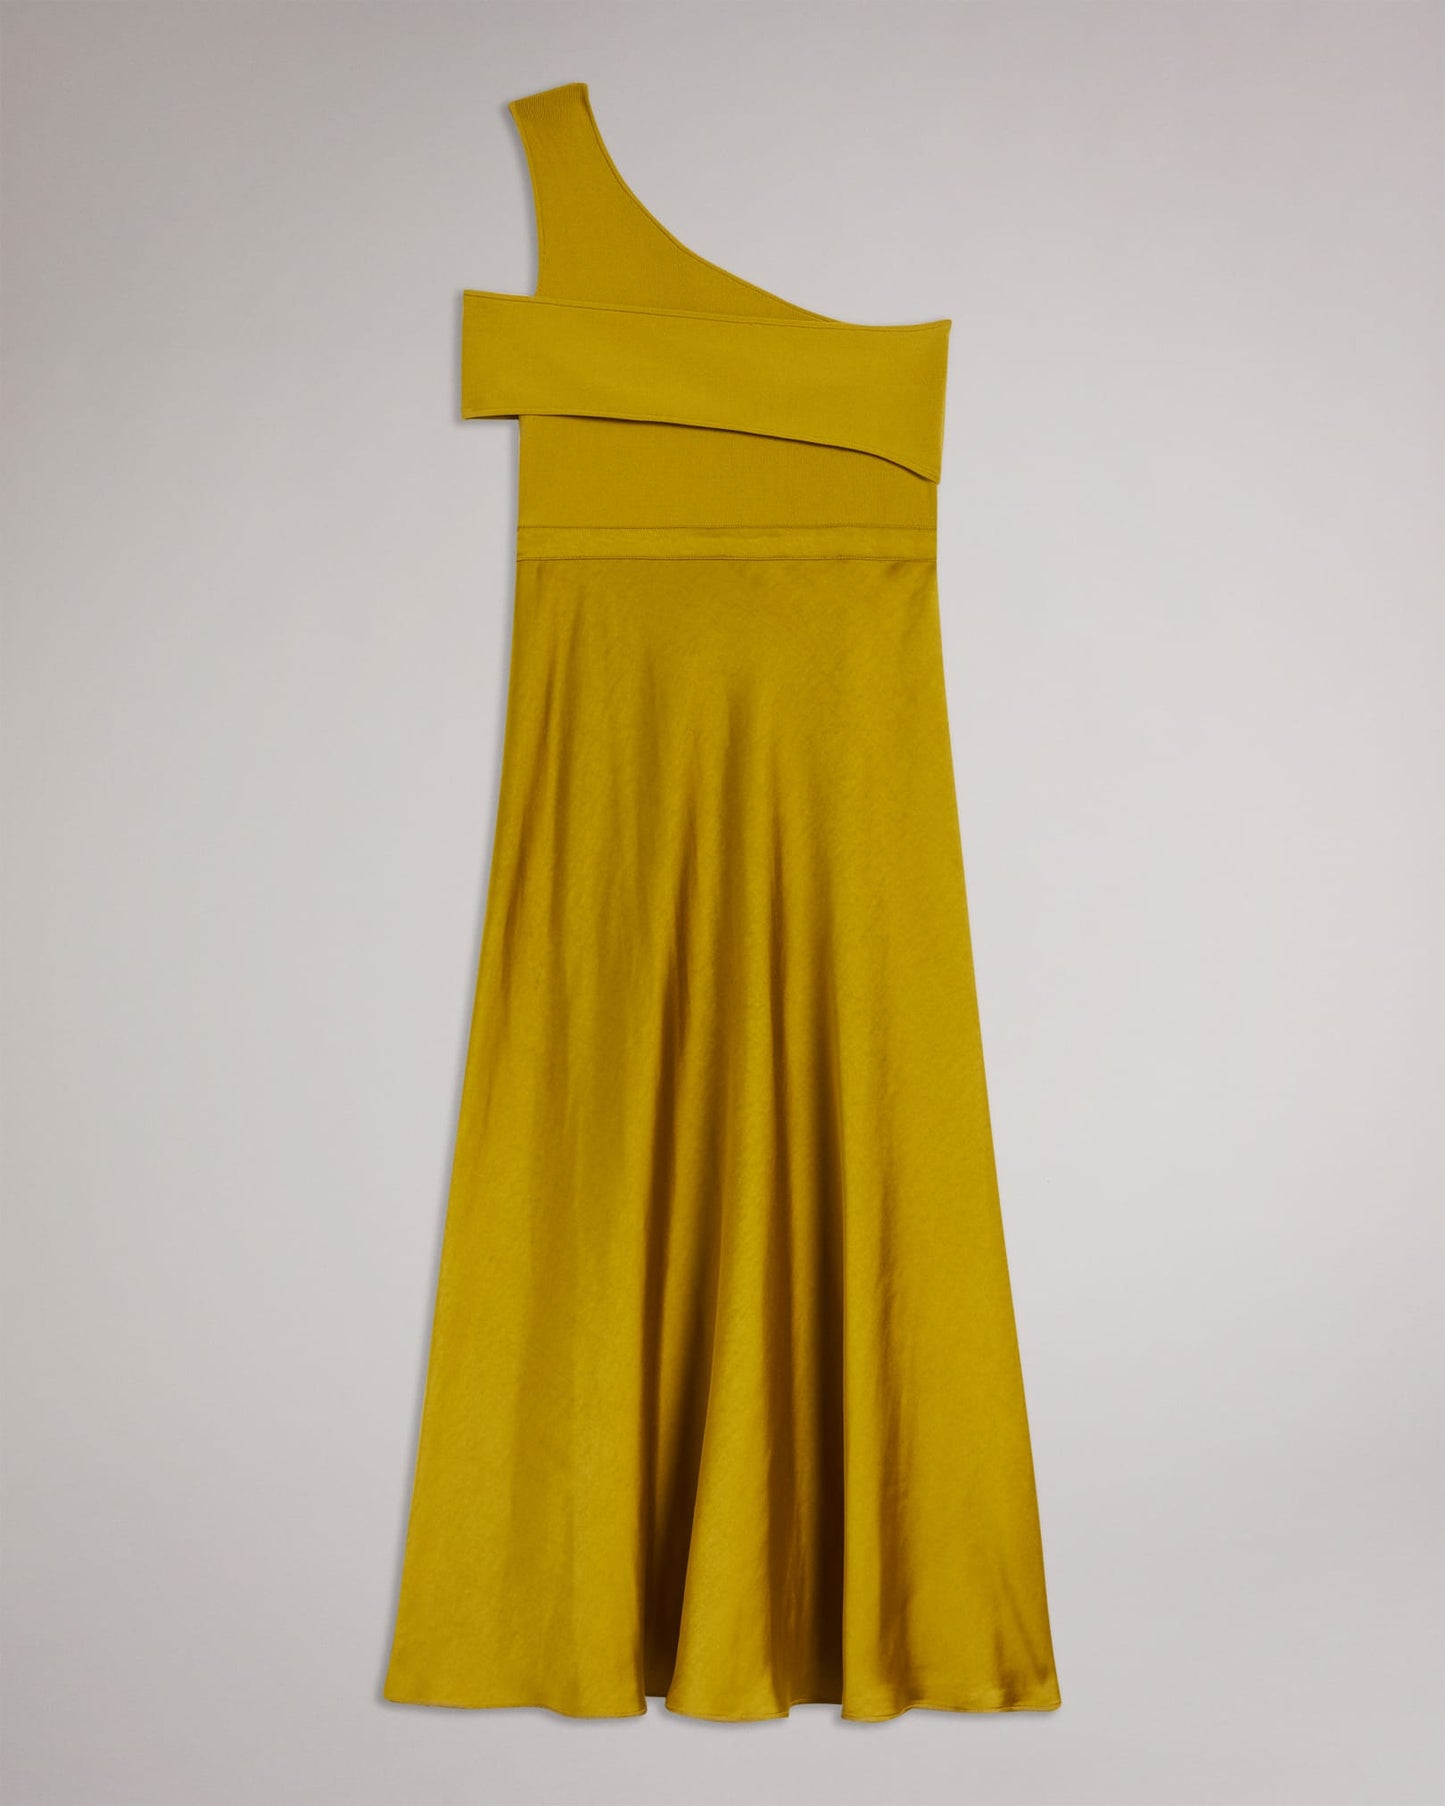 Asymmetric Knit Bodice Dress With Satin Skirt